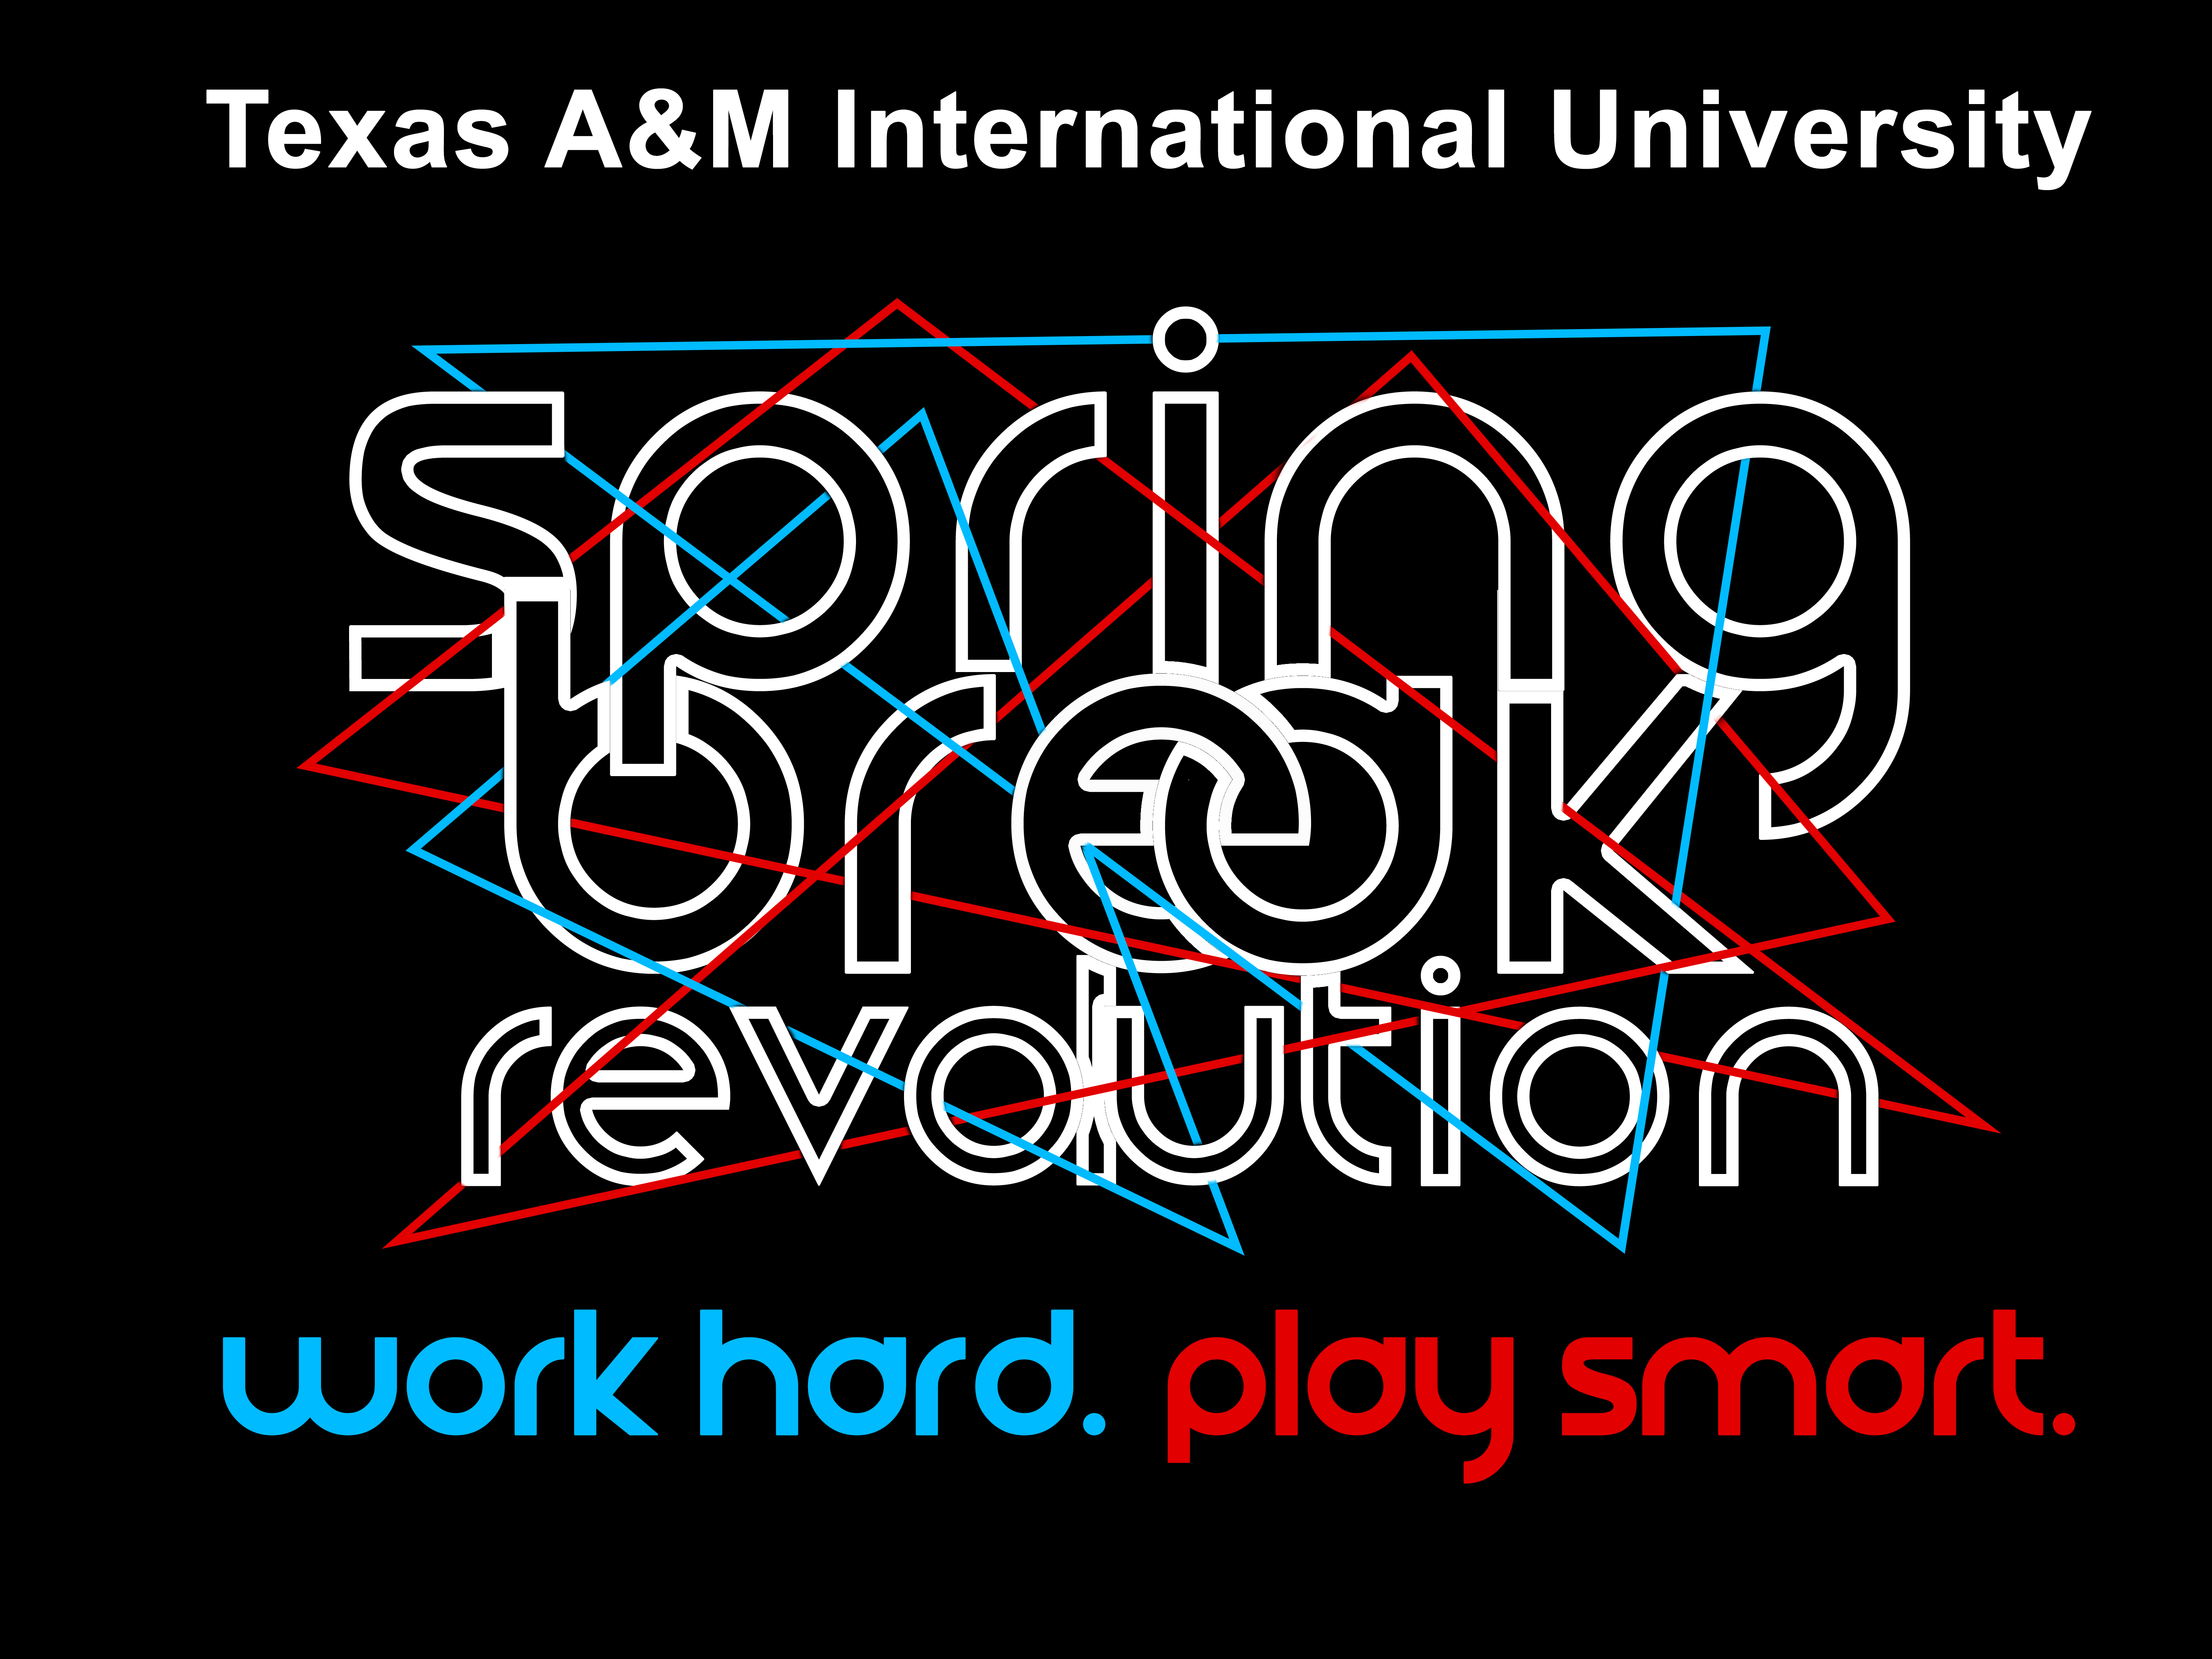 Spring Break Revolution Logo 2019